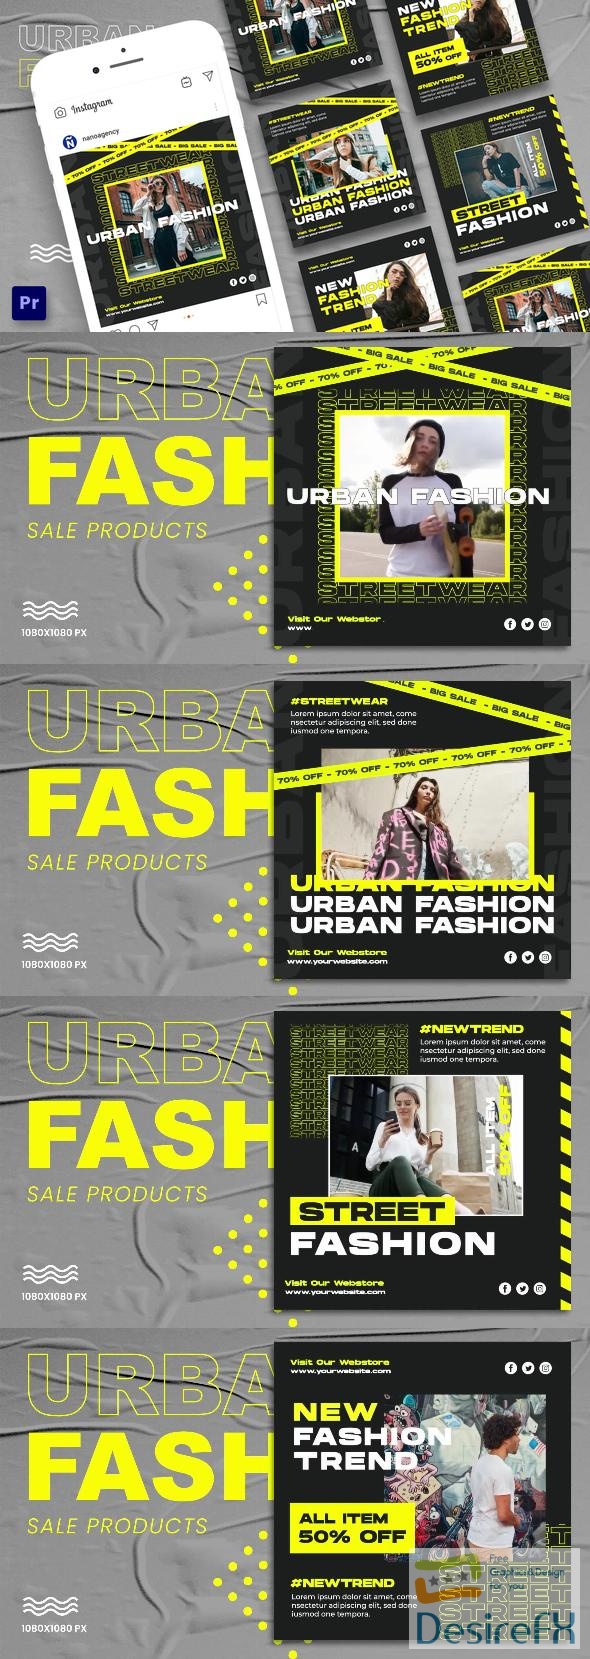 VideoHive Urban Fashion Instagram Post For Premiere Pro 42567160